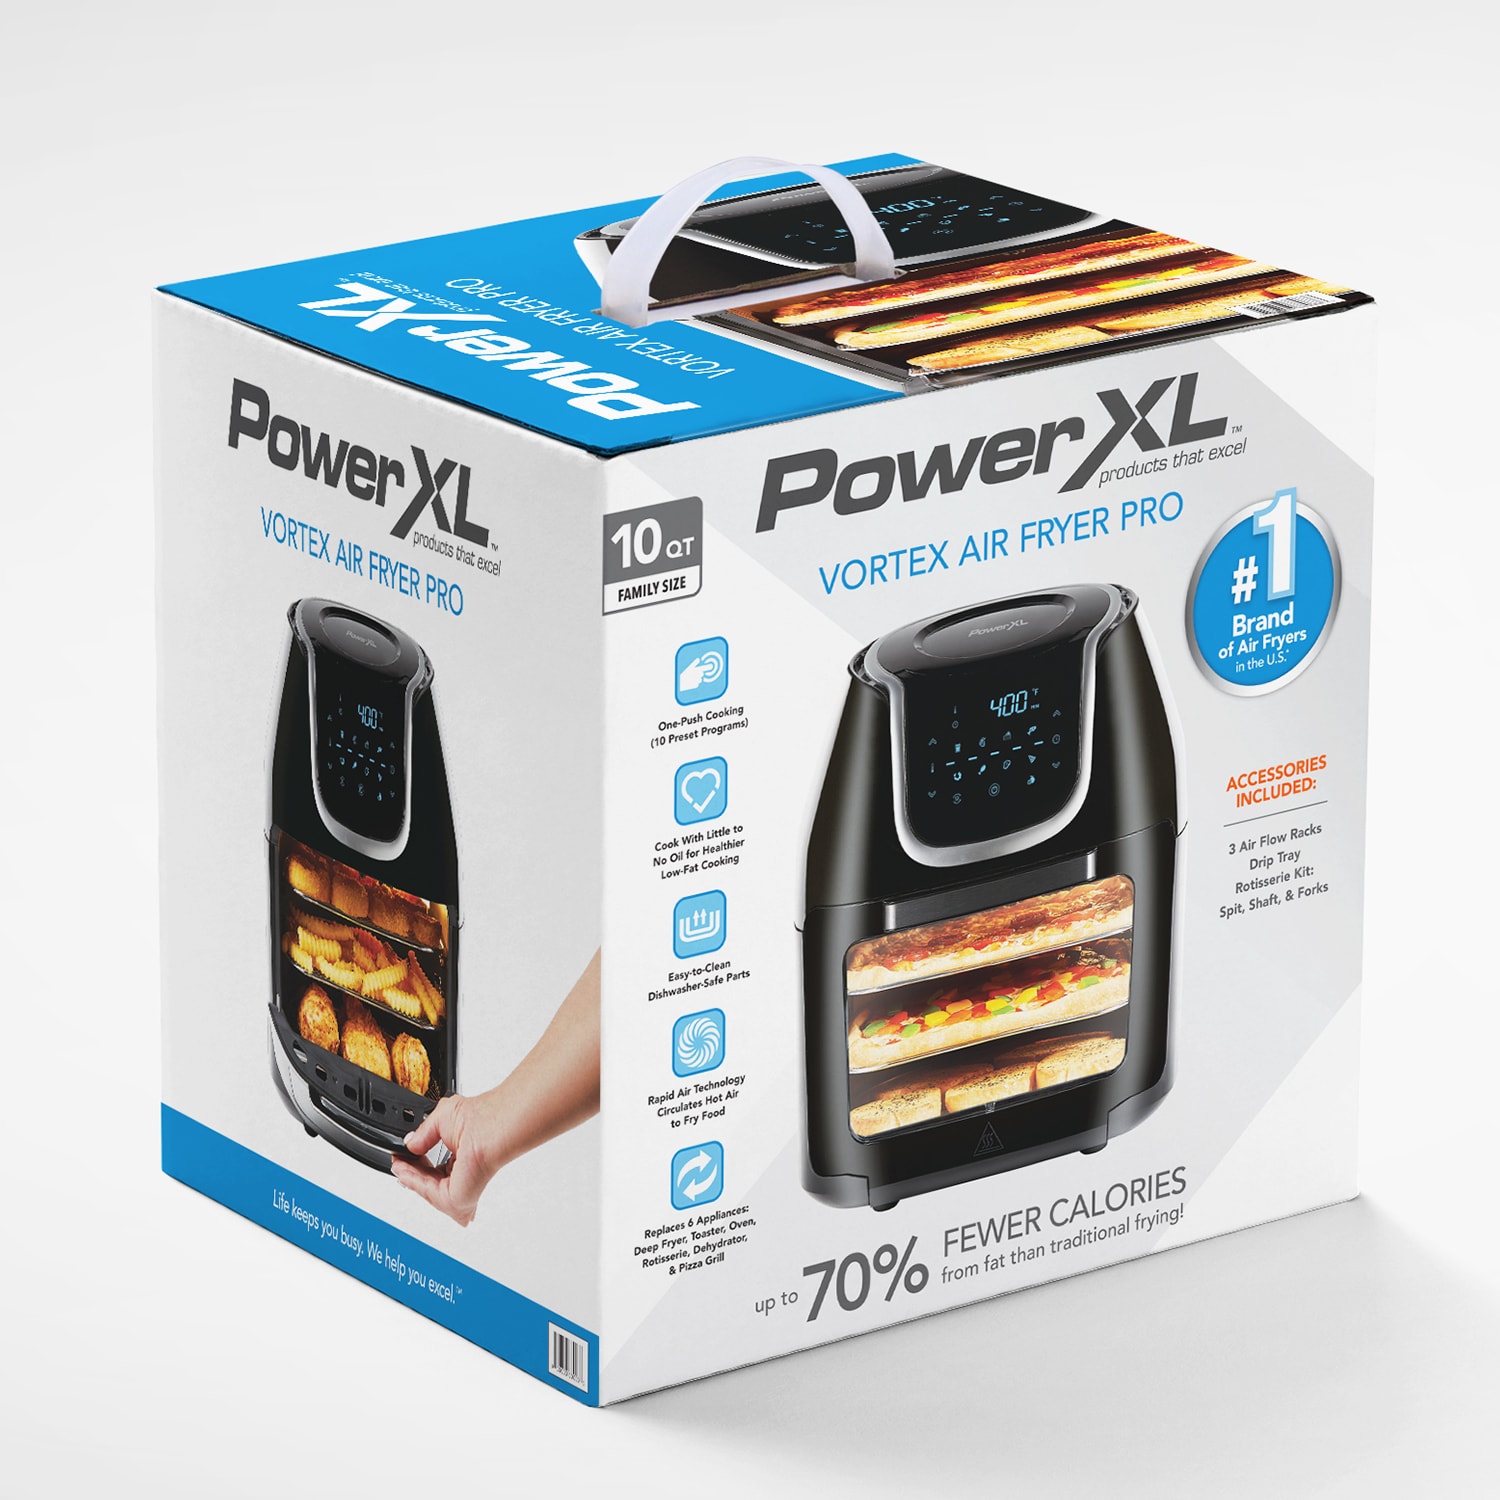 PowerXL 1700W 10-qt Vortex Air Fryer Pro Oven w/ Presets & Accessories 